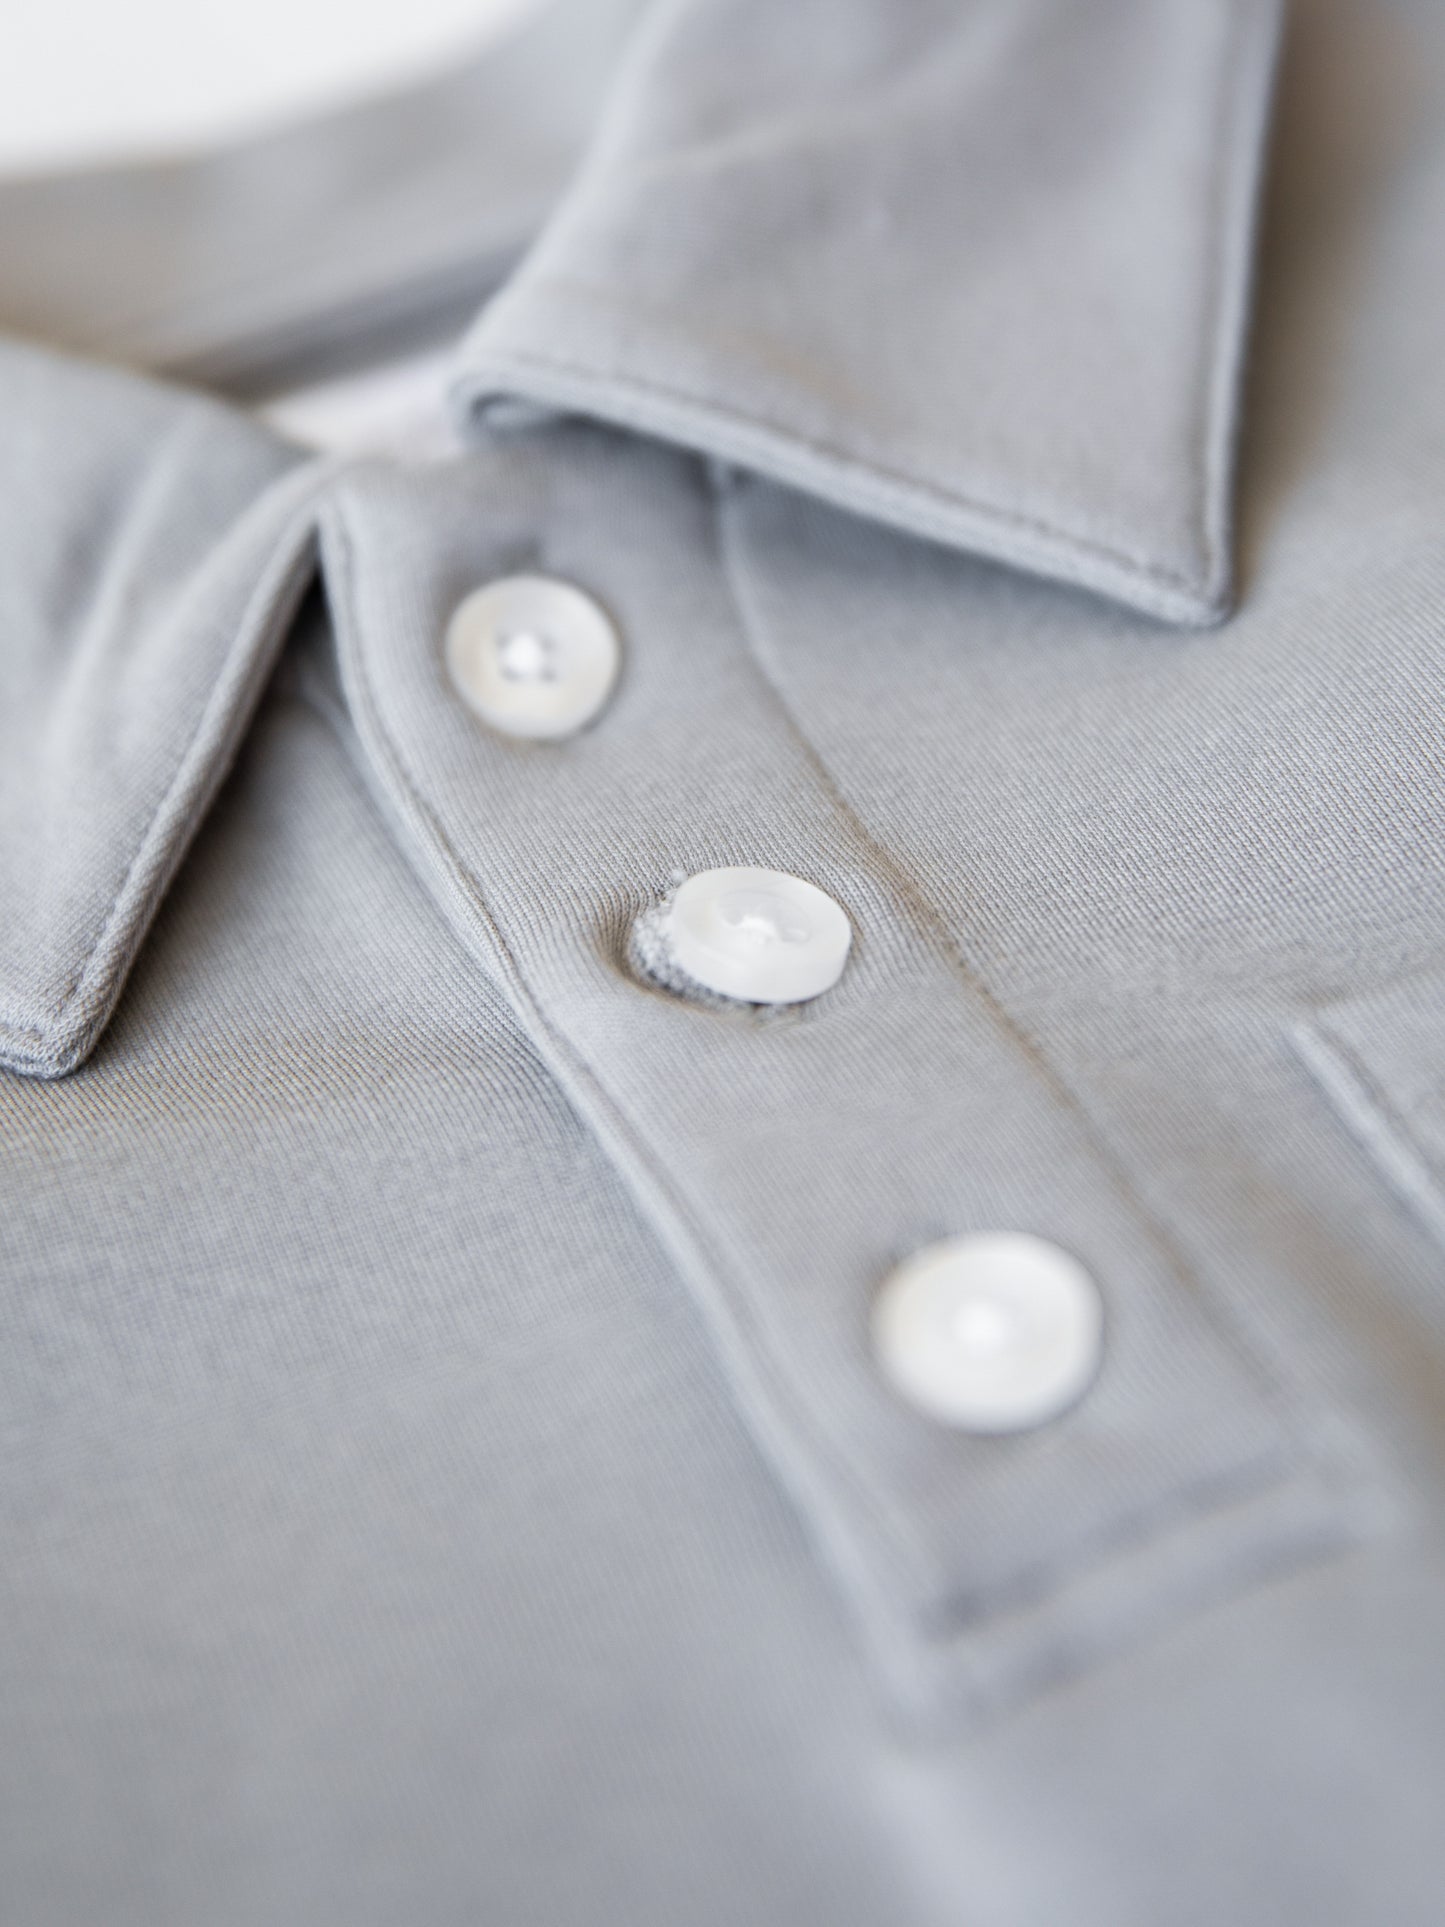 Polo Shirt - Steel Gray